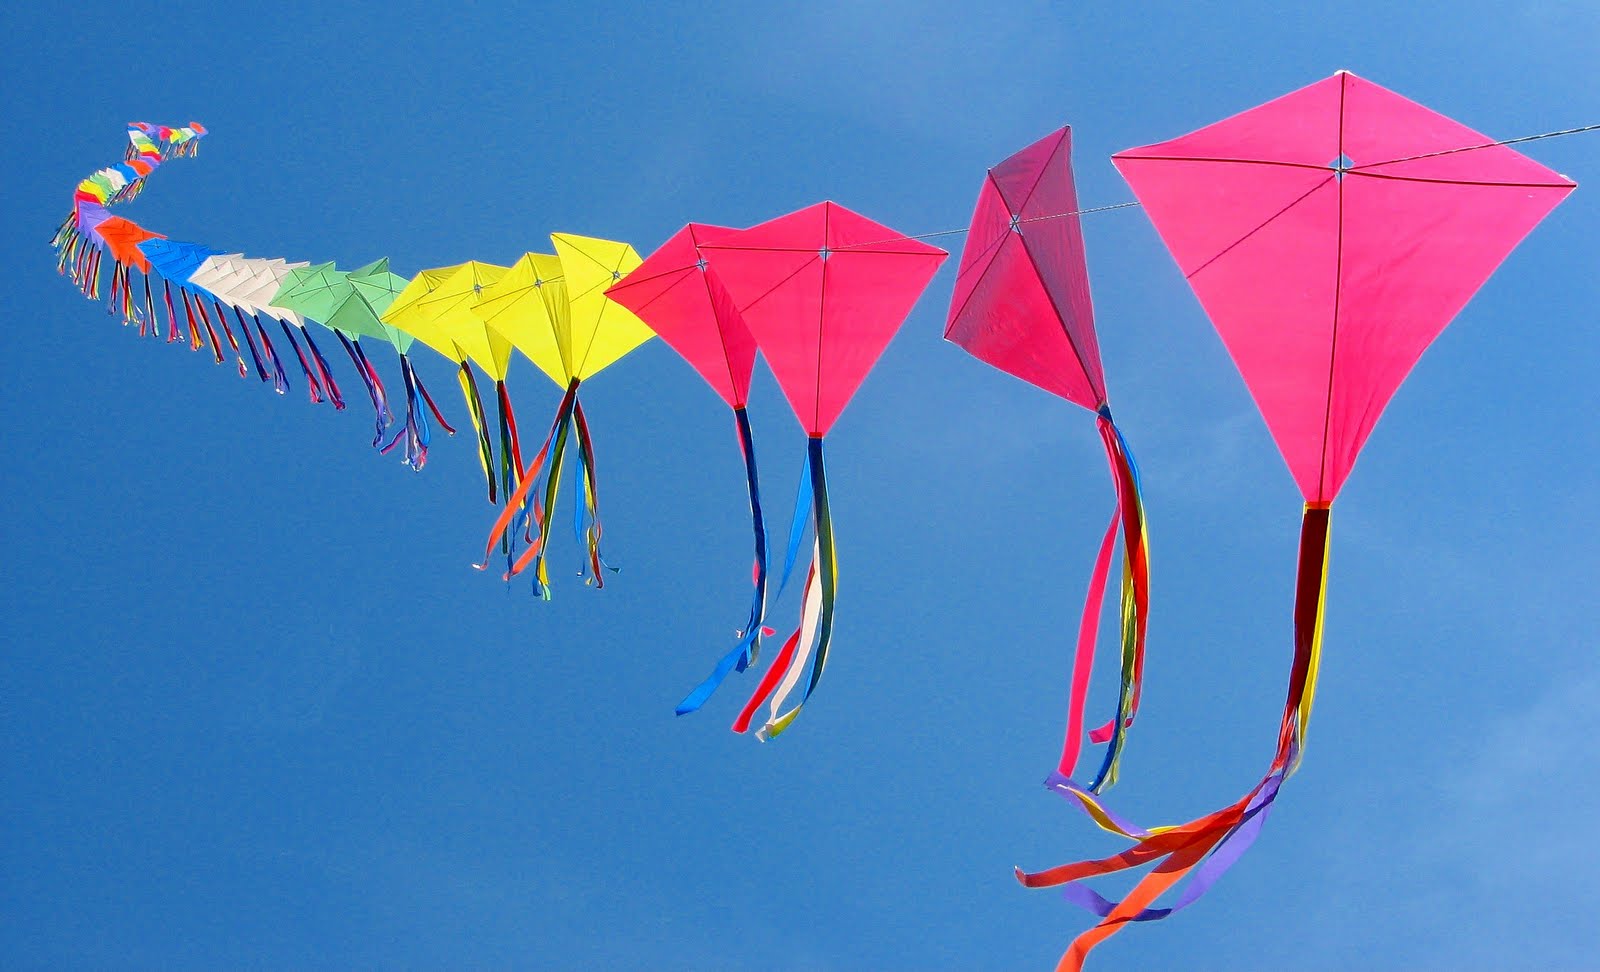 Tybee Island Kite Festival | Discover Tybee Island